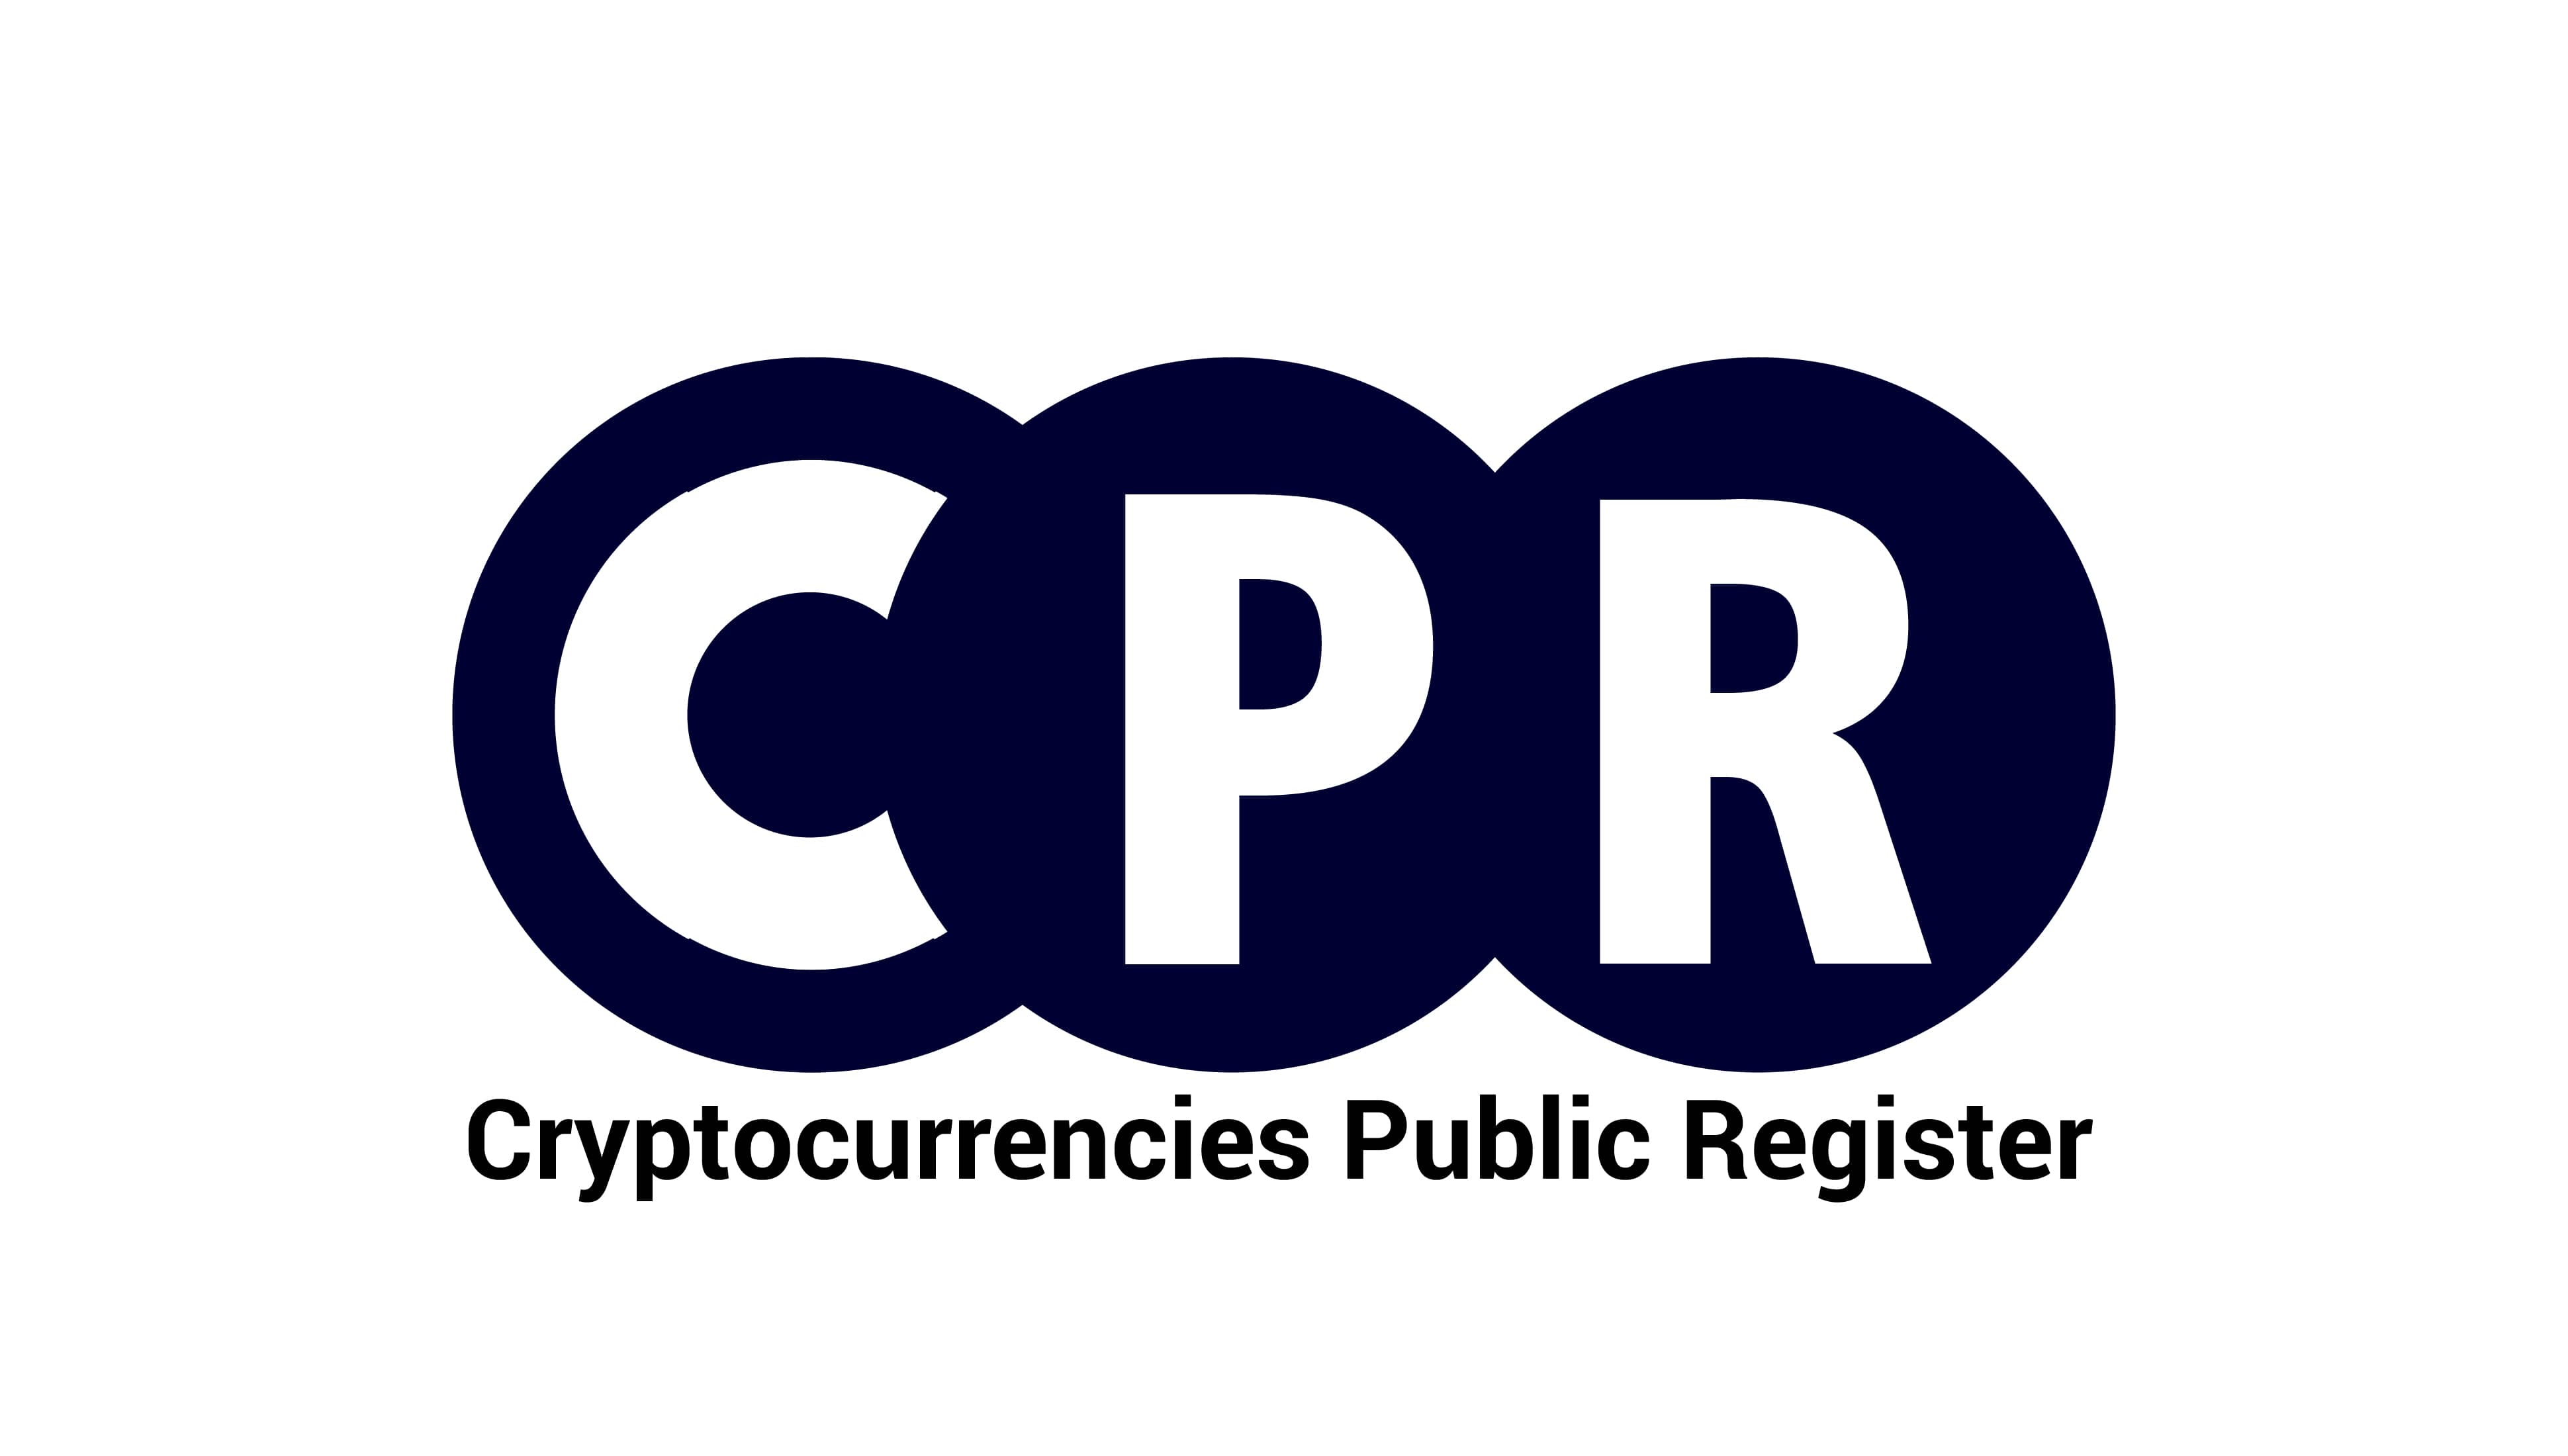 NGO presents the Public Registry of Cryptocurrencies